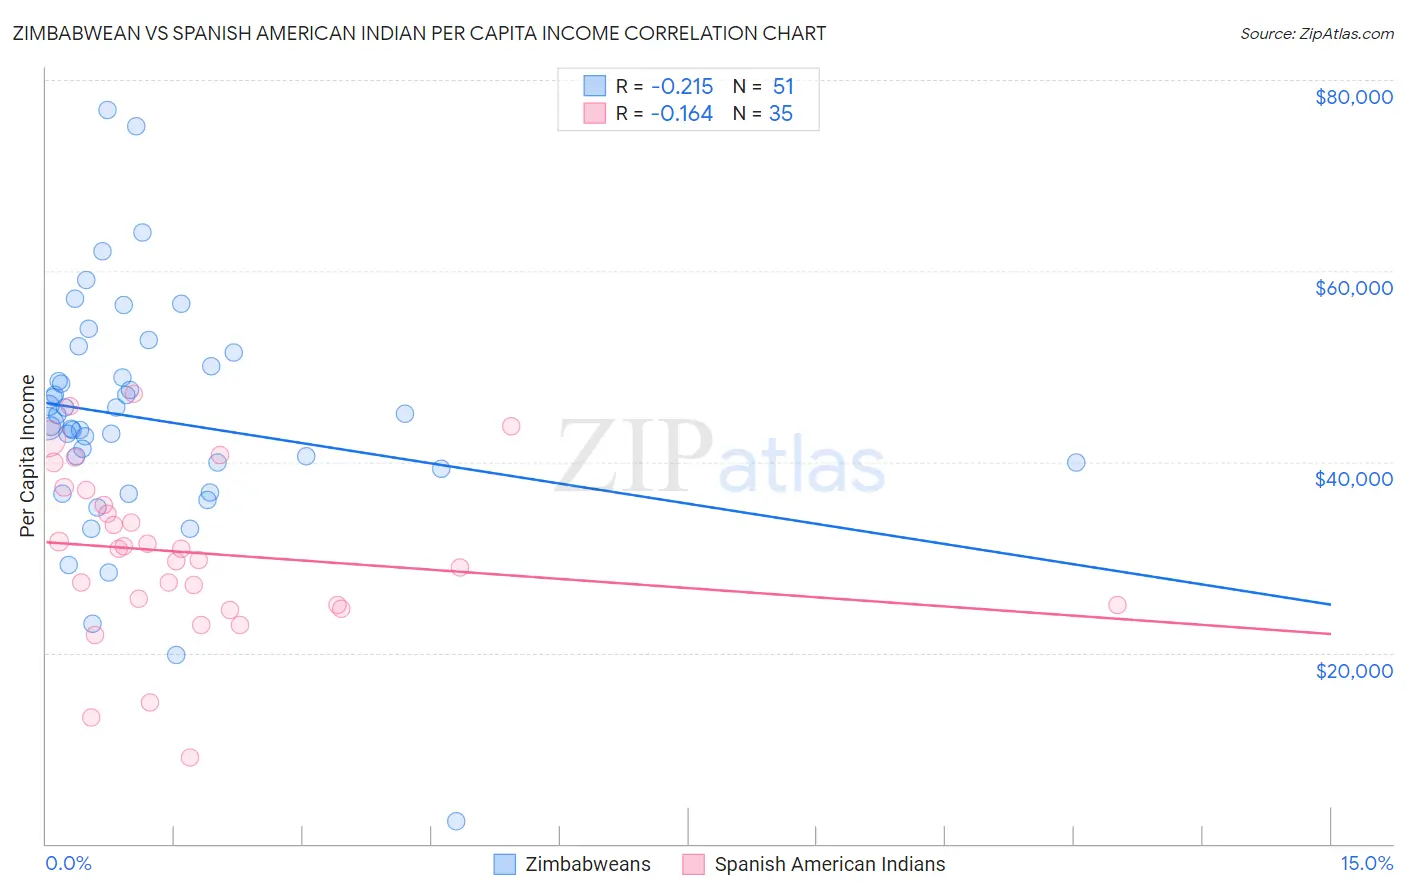 Zimbabwean vs Spanish American Indian Per Capita Income